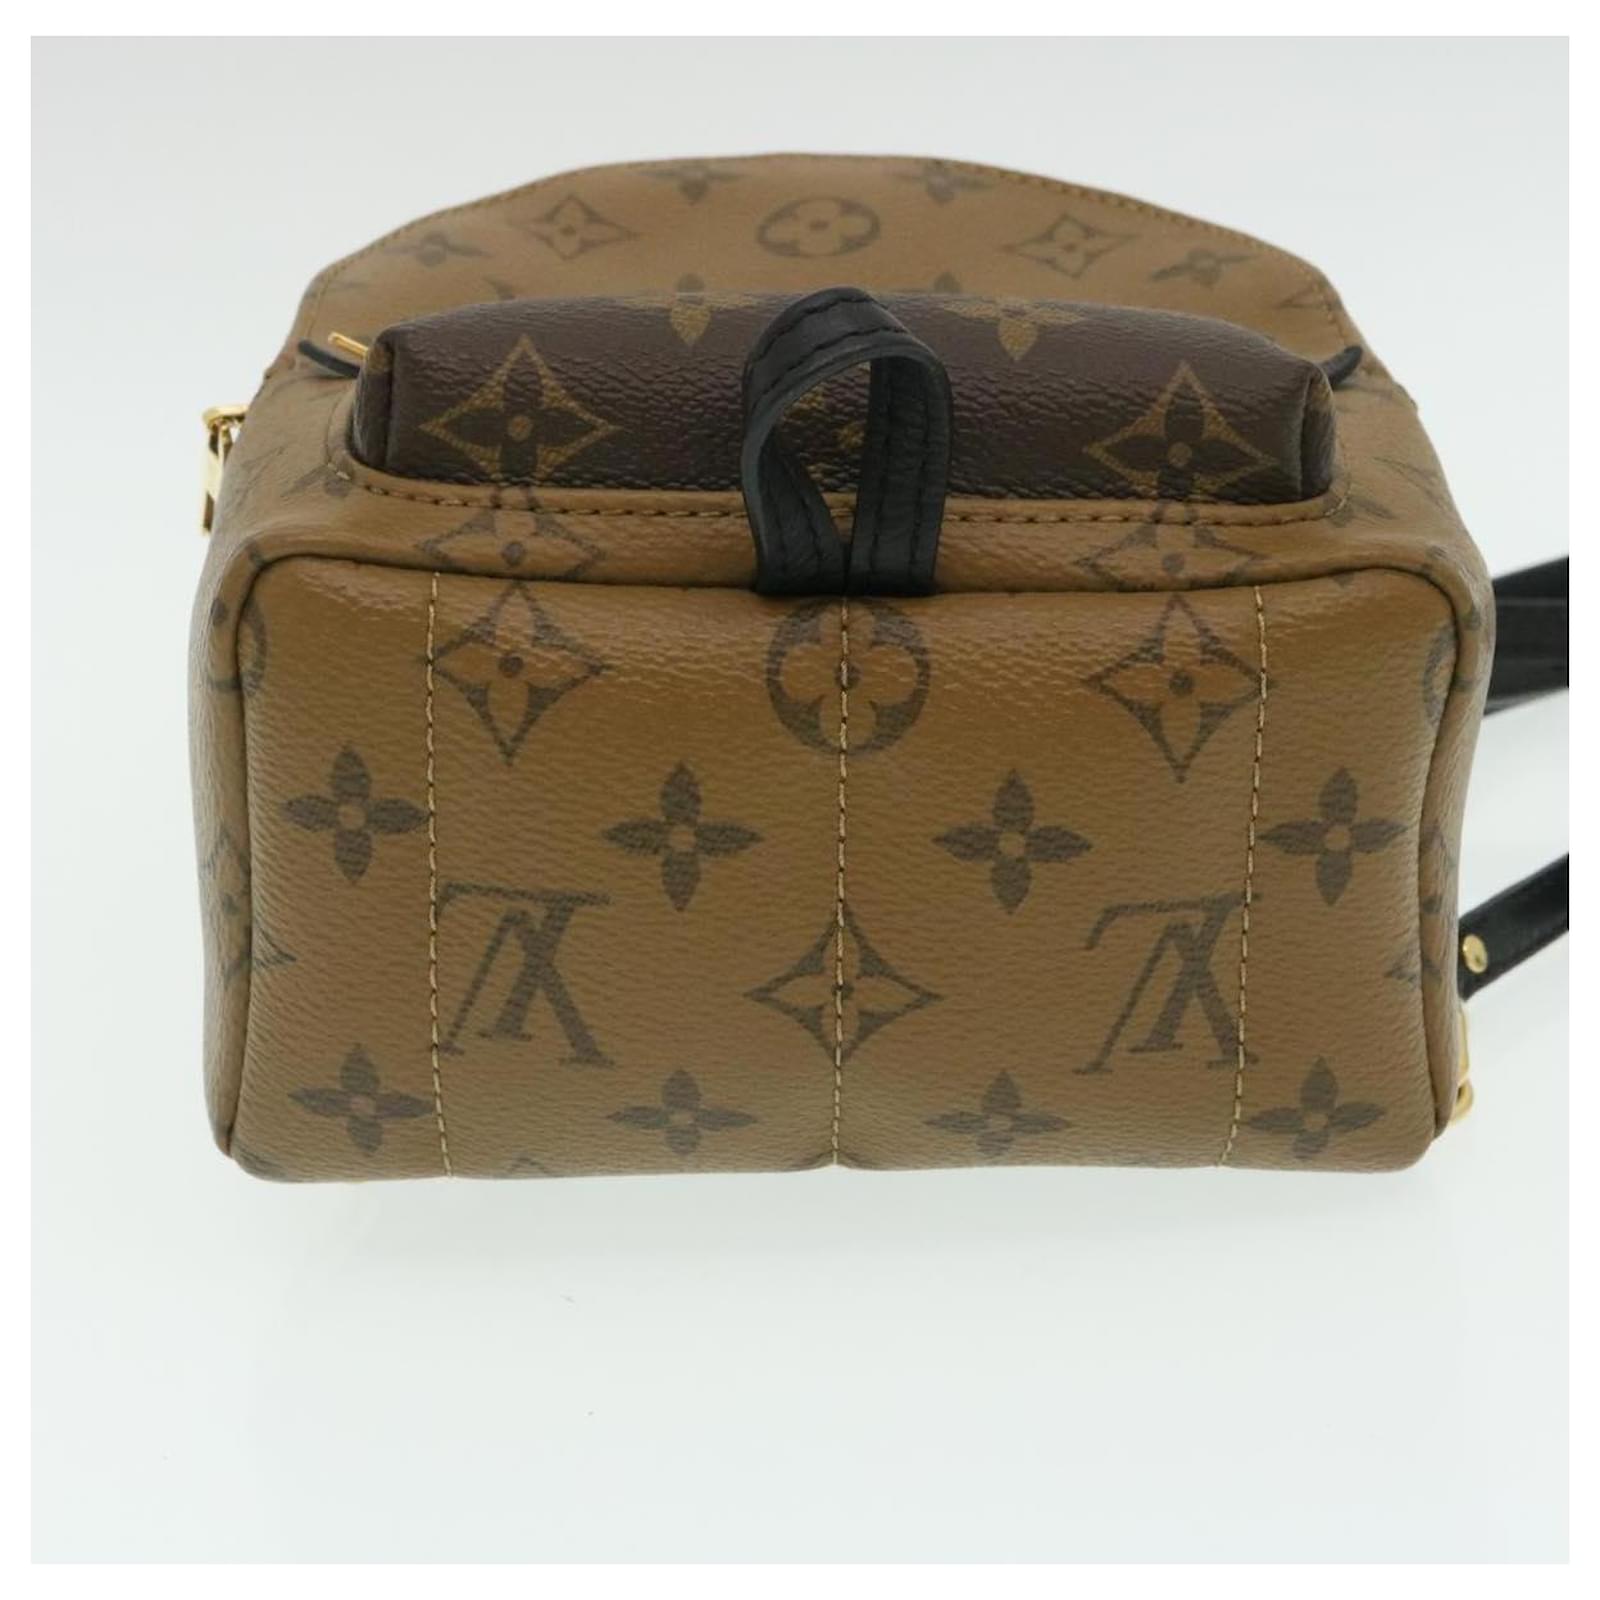 Louis Vuitton, Bags, Palm Springs Mini Reverse Monogram Backpack M44872